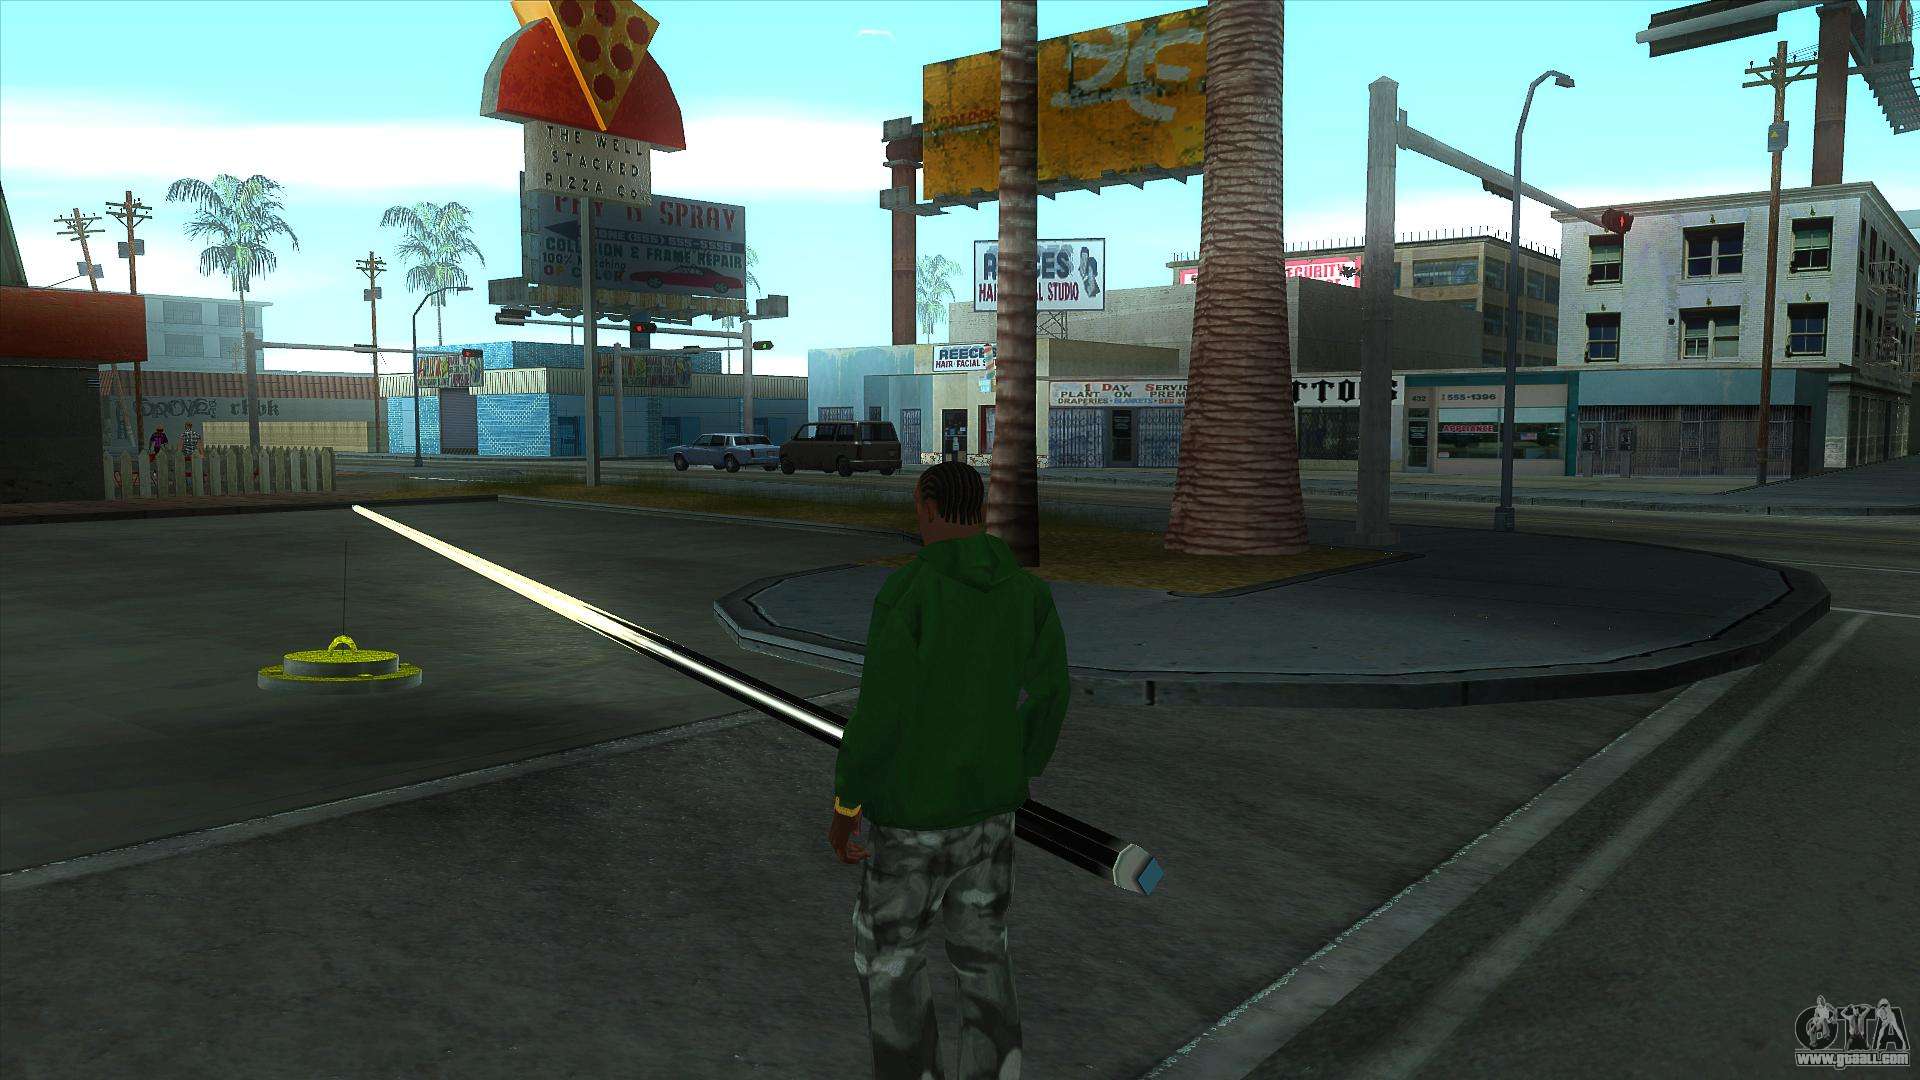 Cleo Mod San Andreas for GTA San Andreas